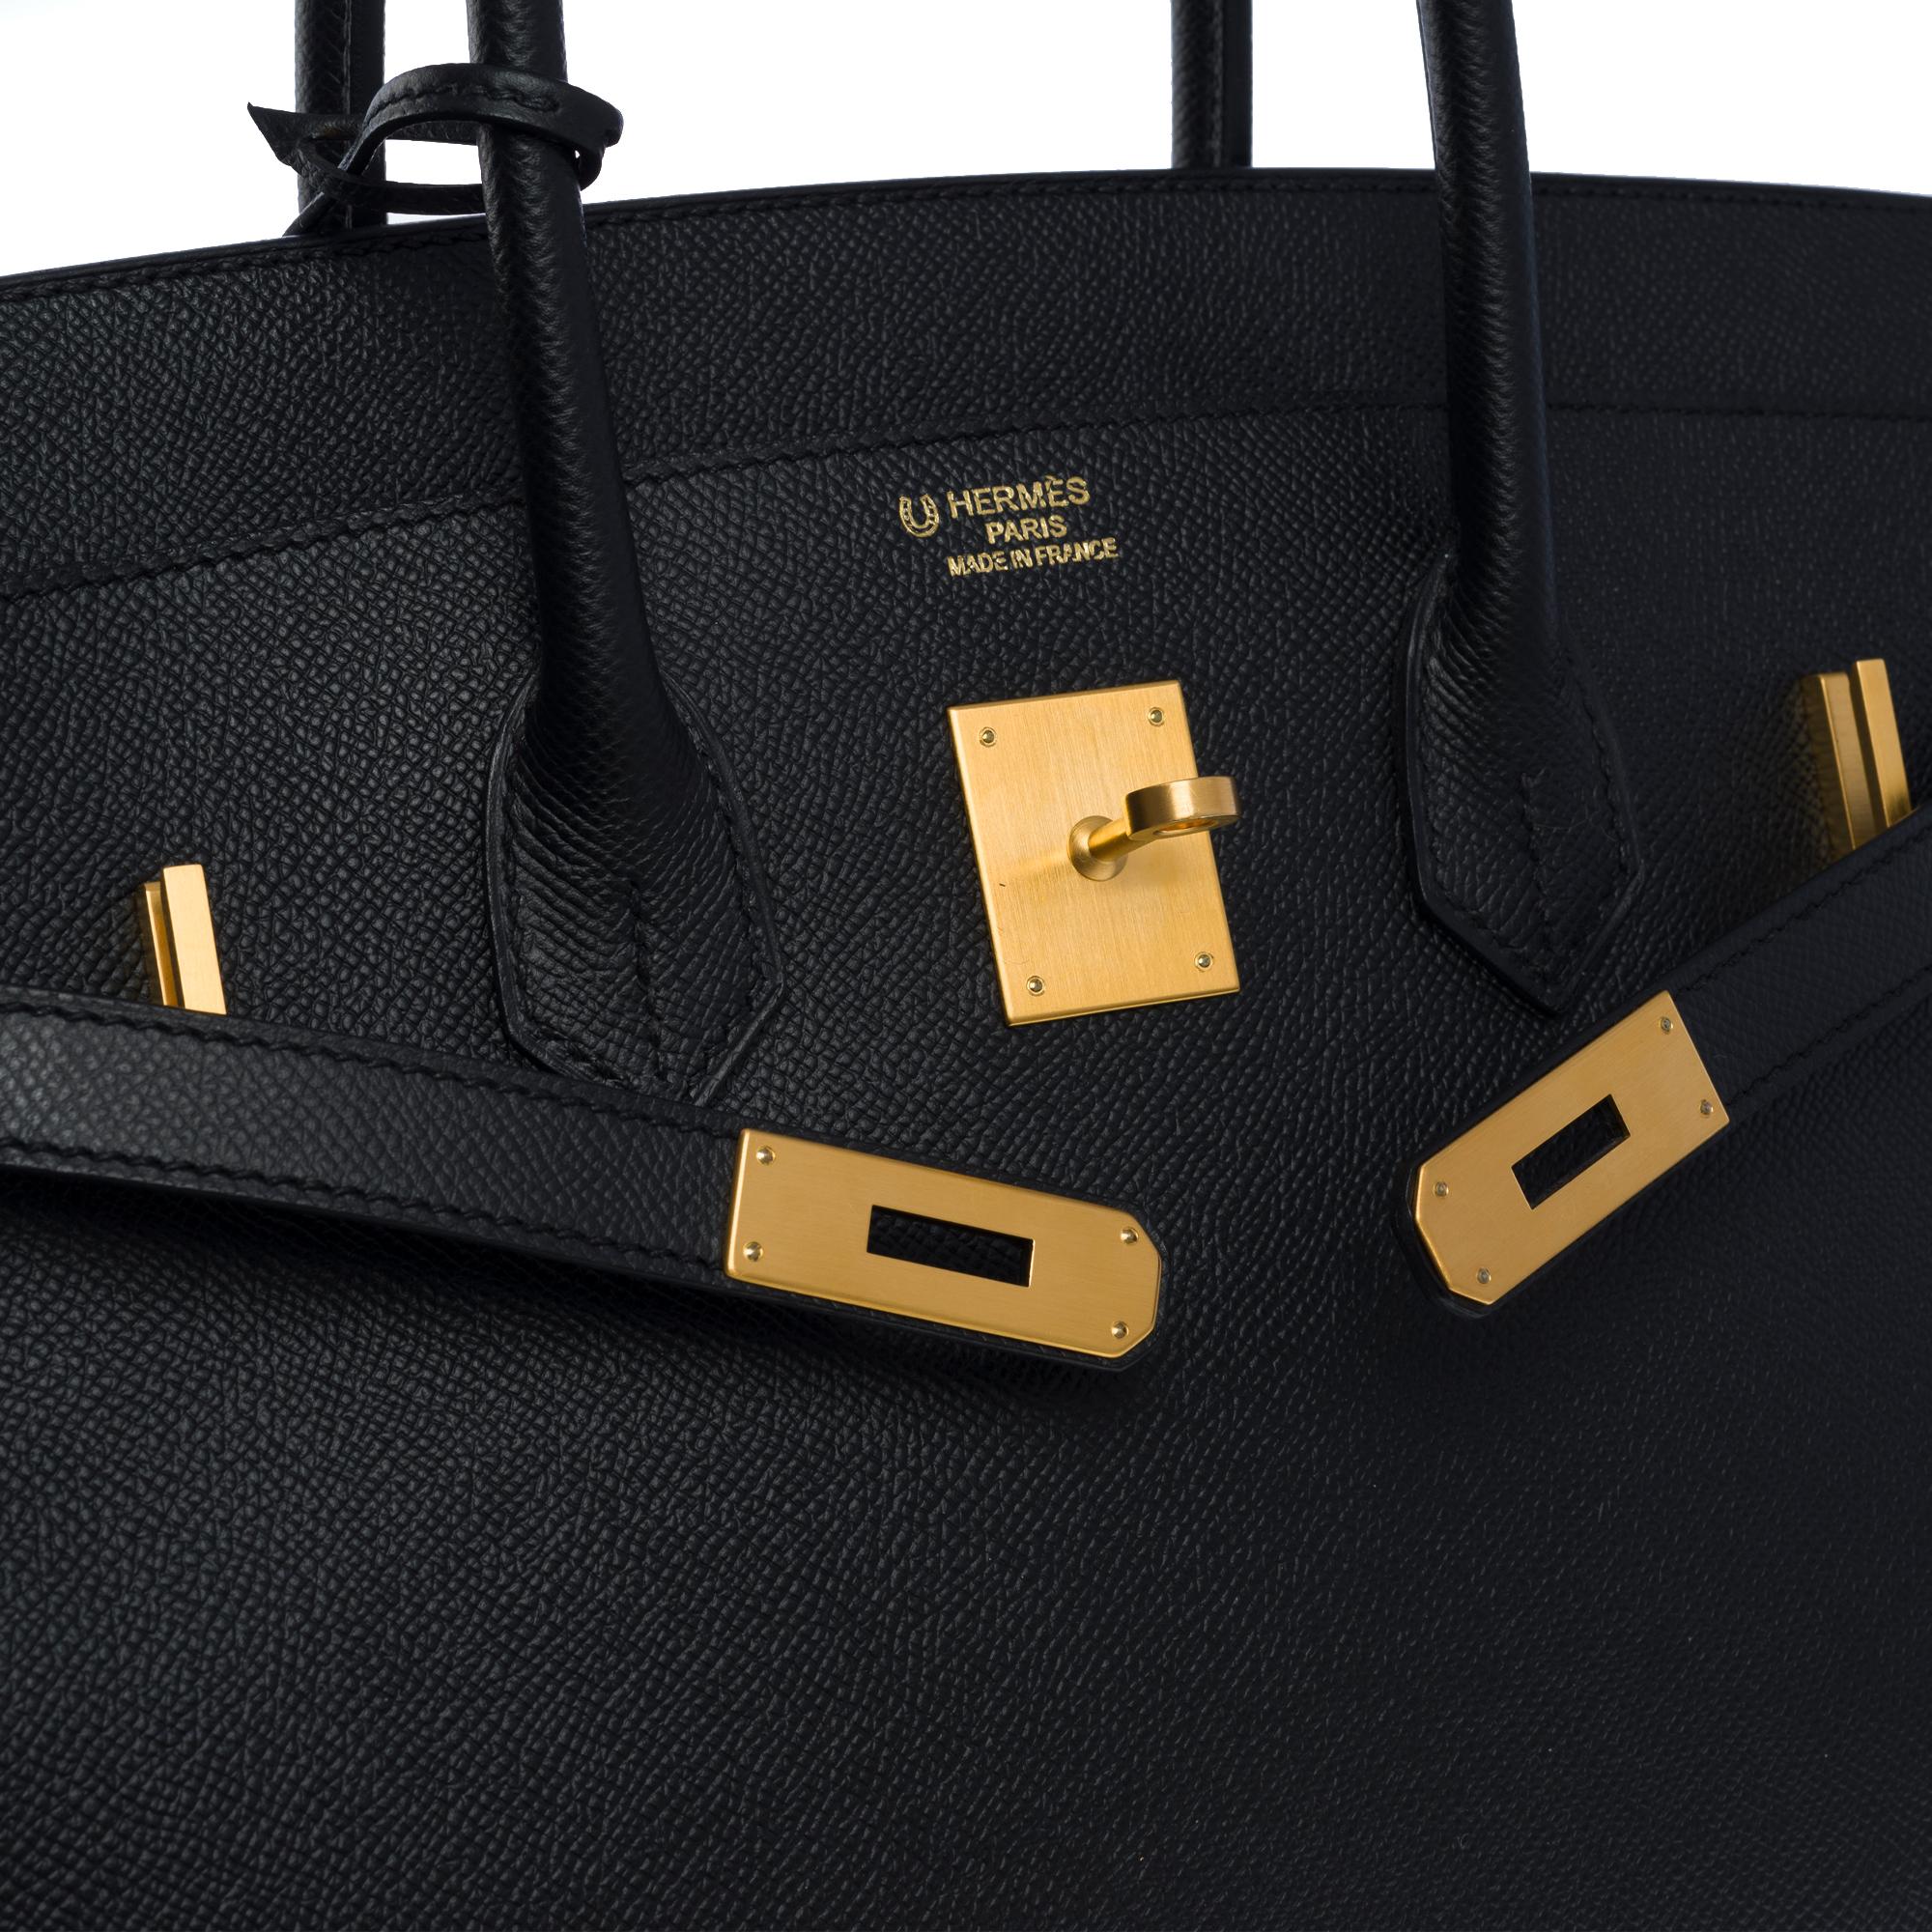 Rare Hermès Birkin 35 HSS (Special Order) handbag in black epsom leather, BGHW 1